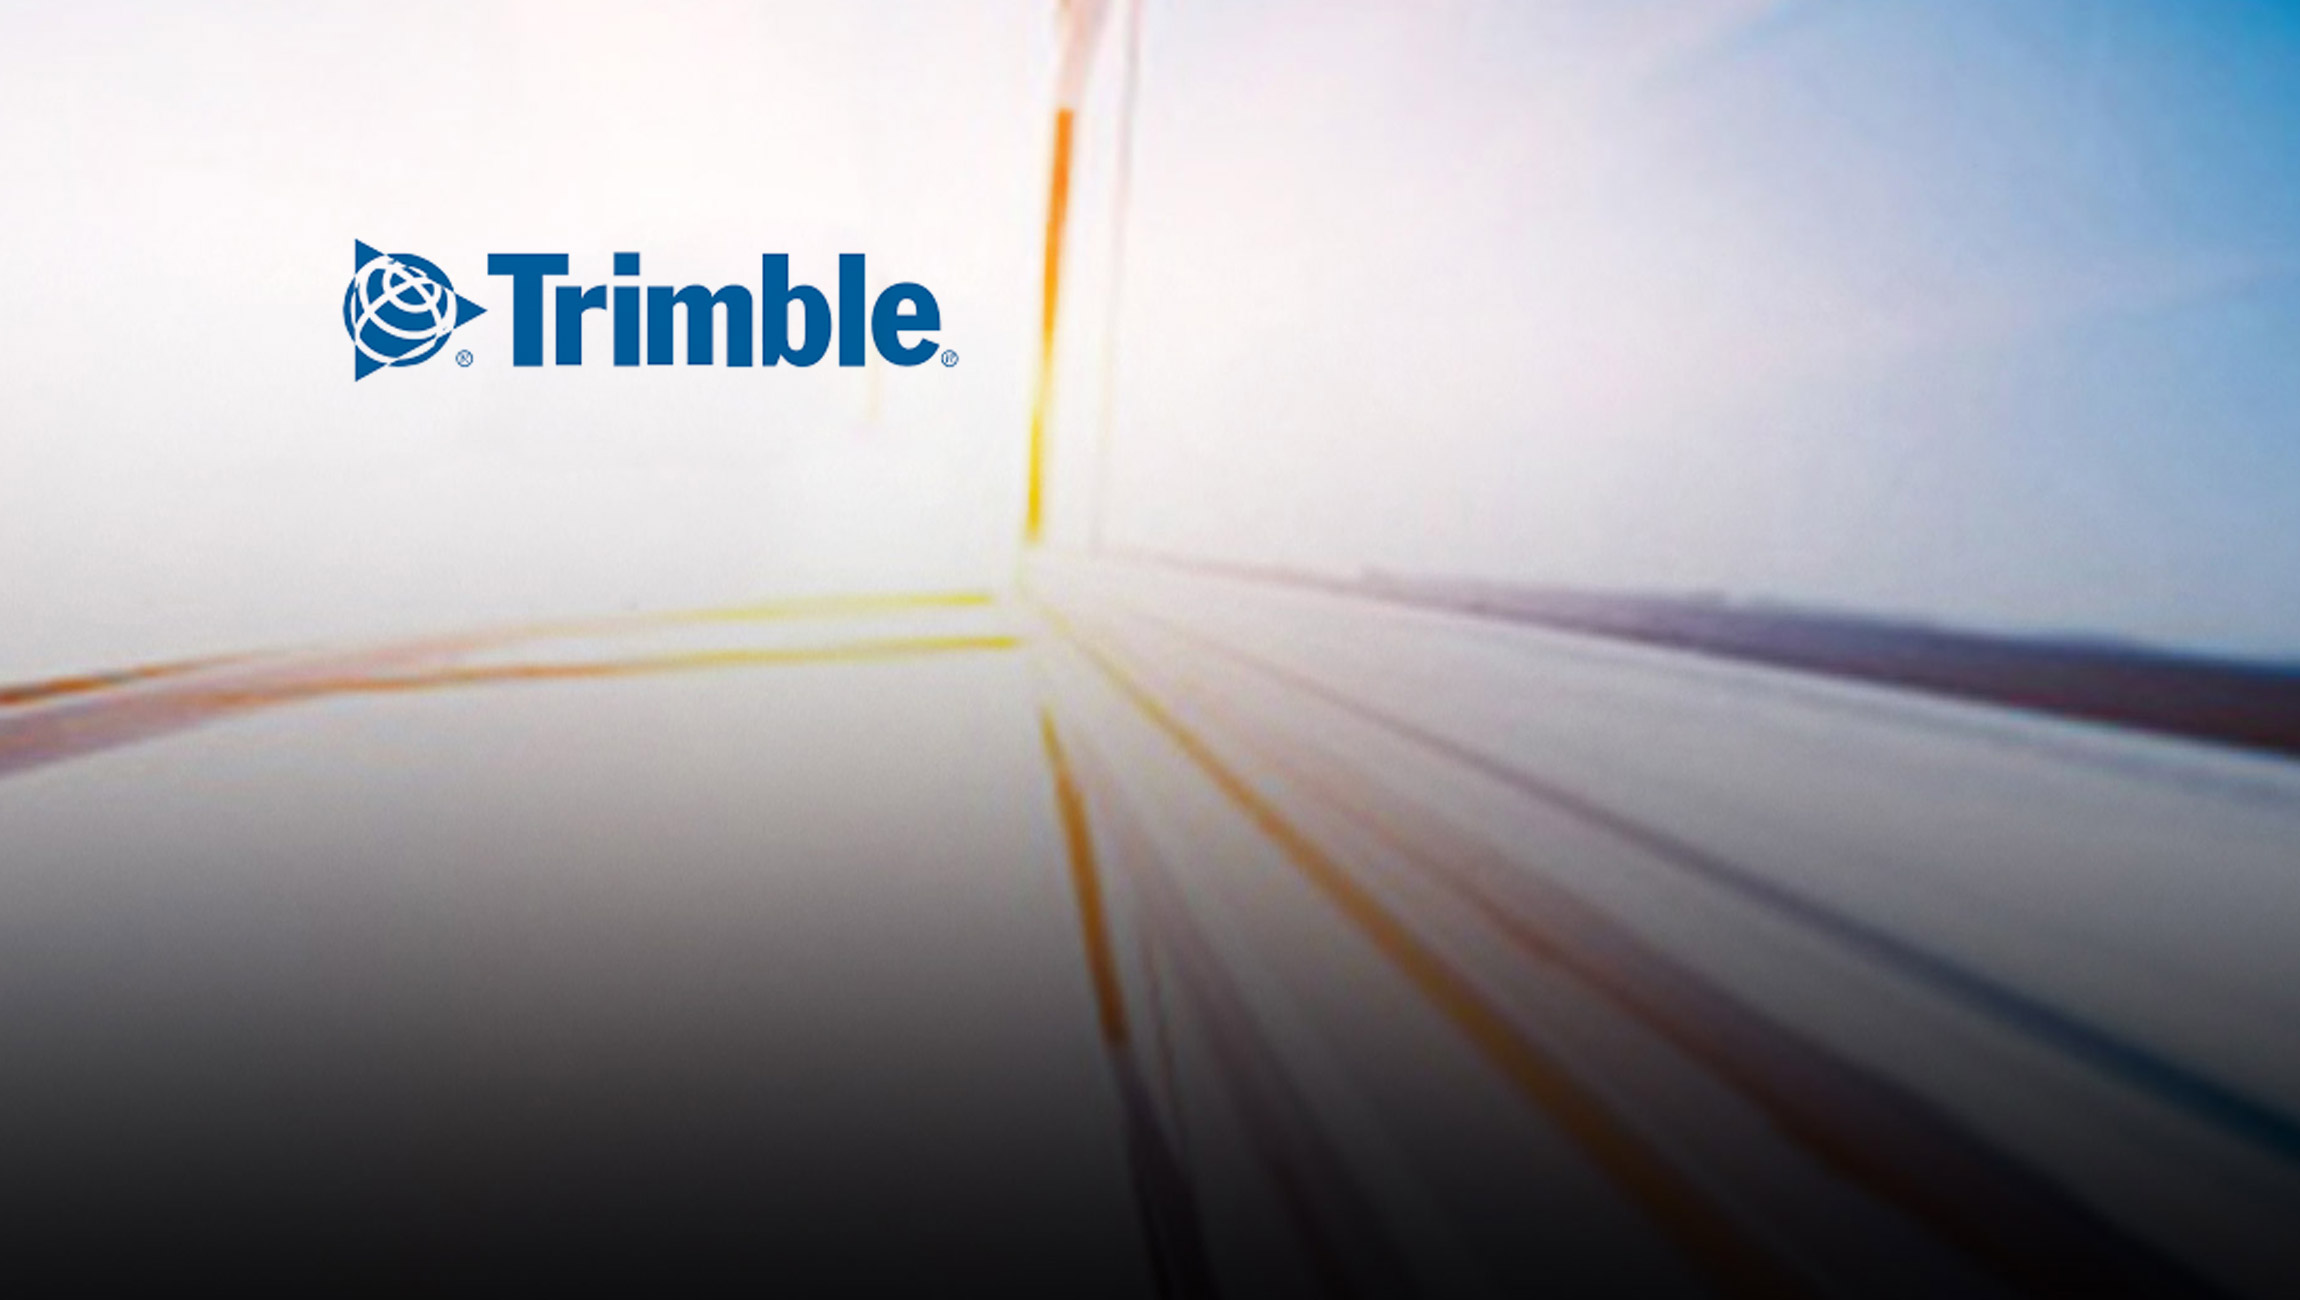 Trimble Releases 2020 Sustainability ReportTrimble Releases 2020 Sustainability Report